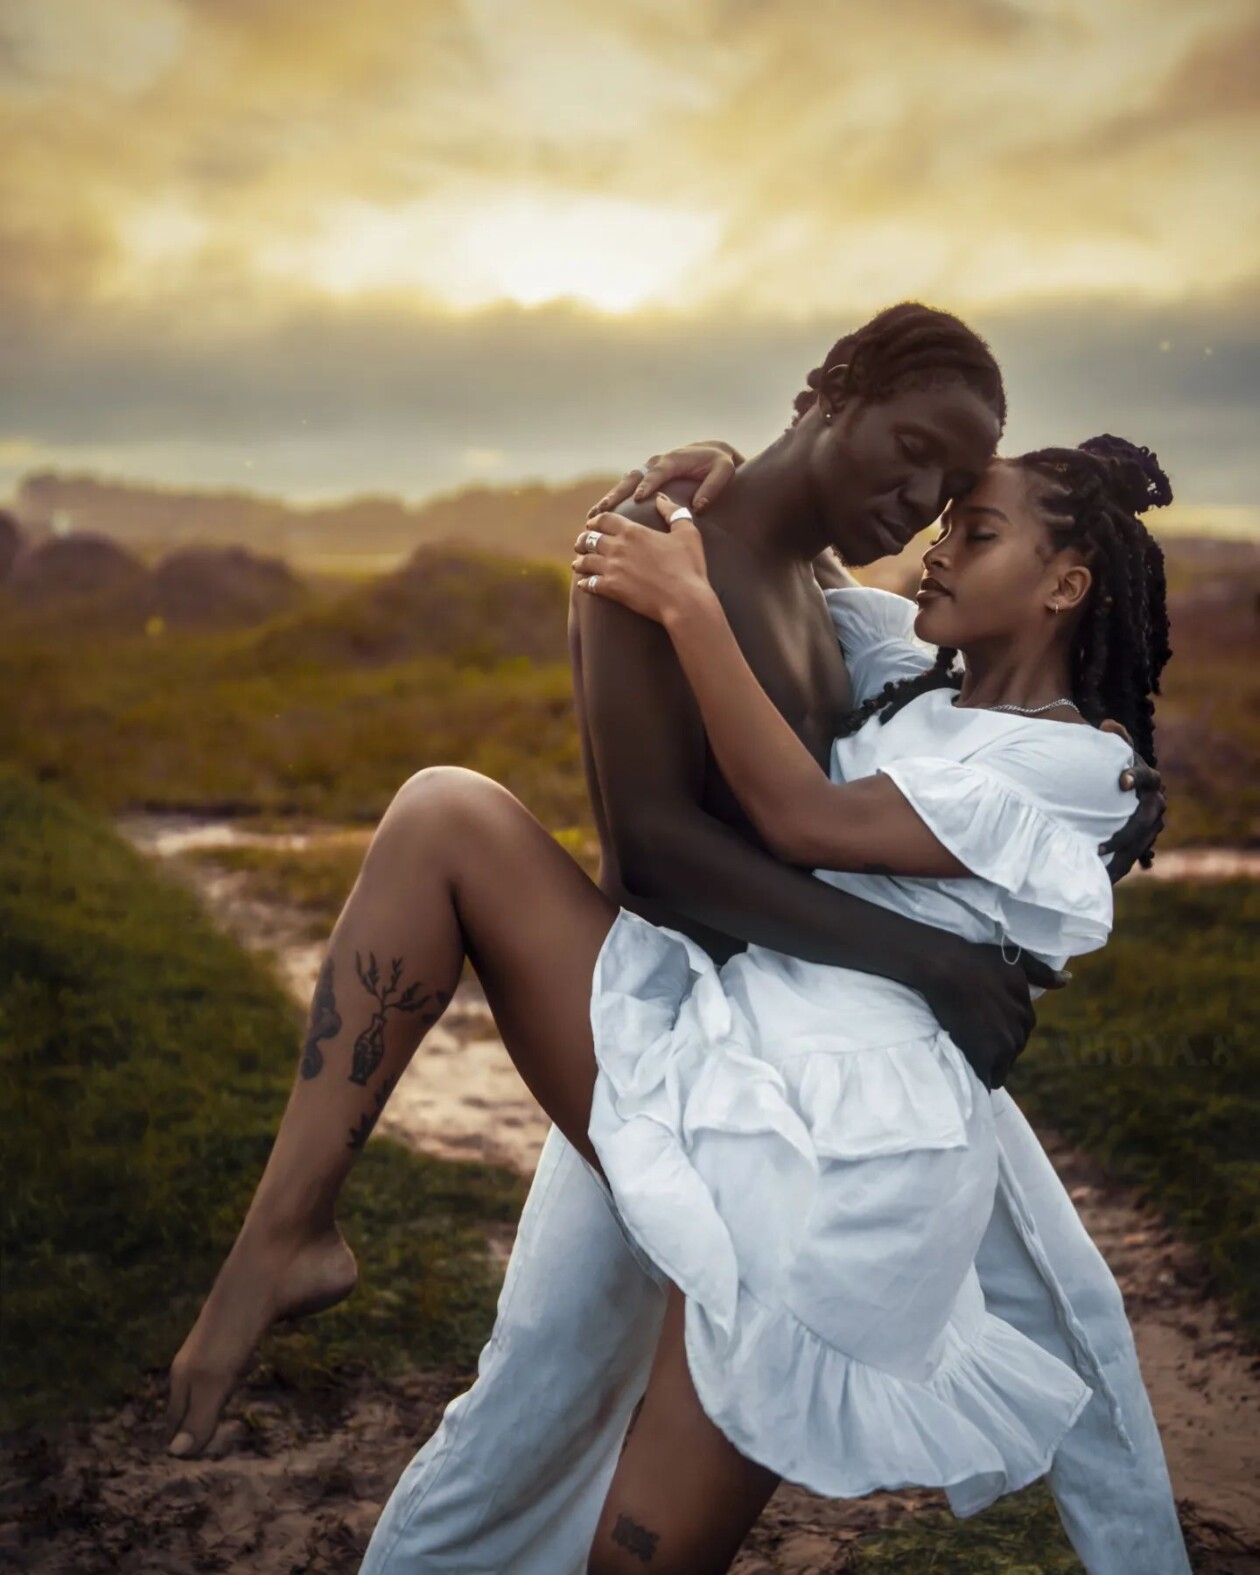 Black Beauty, The Splendid Photography By Michael Aboya (13)